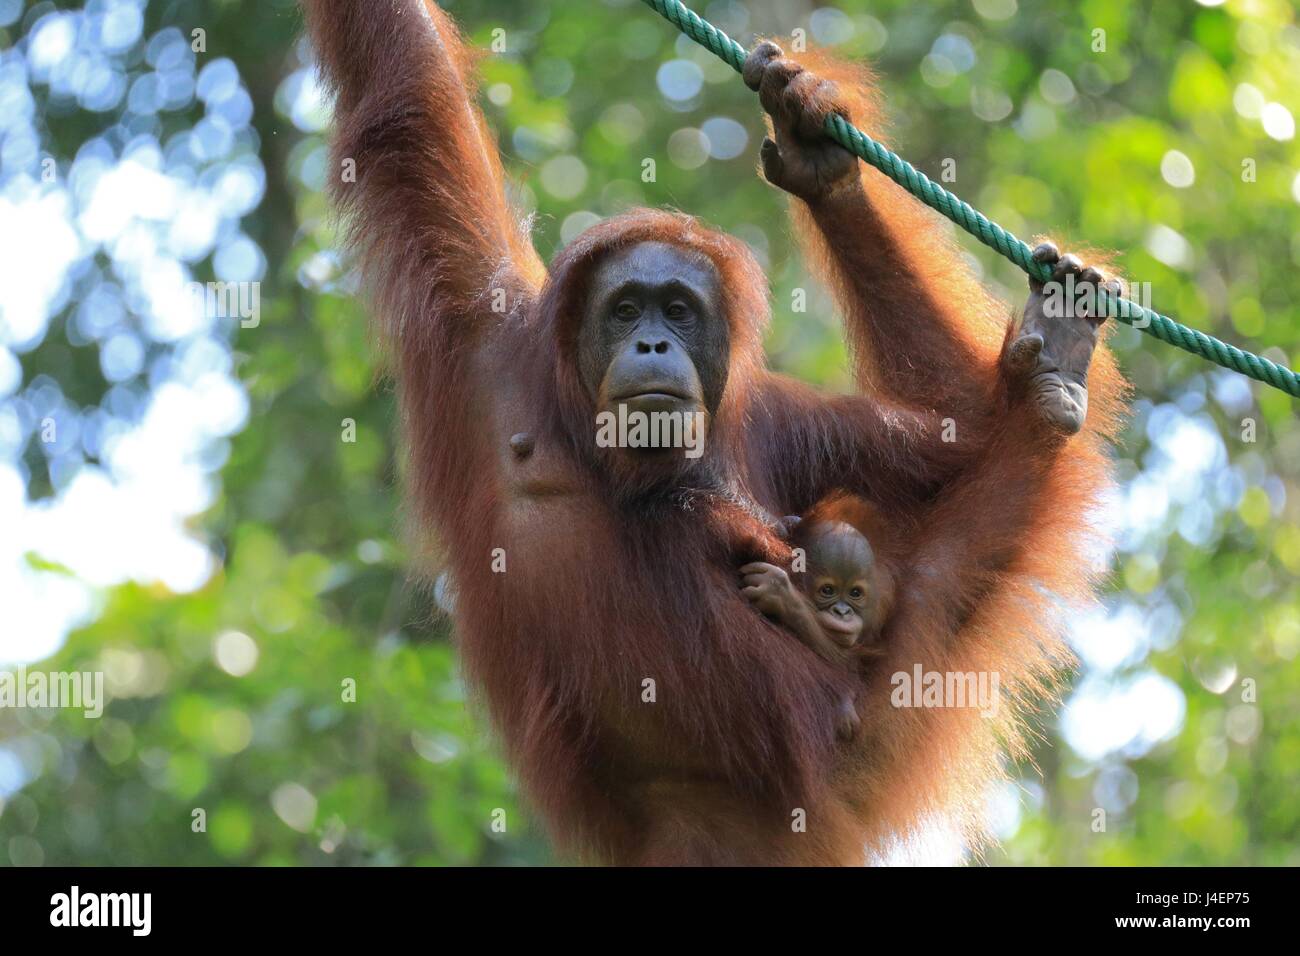 https://c8.alamy.com/comp/J4EP75/bornean-orangutan-mother-and-baby-borneo-malaysia-southeast-asia-asia-J4EP75.jpg